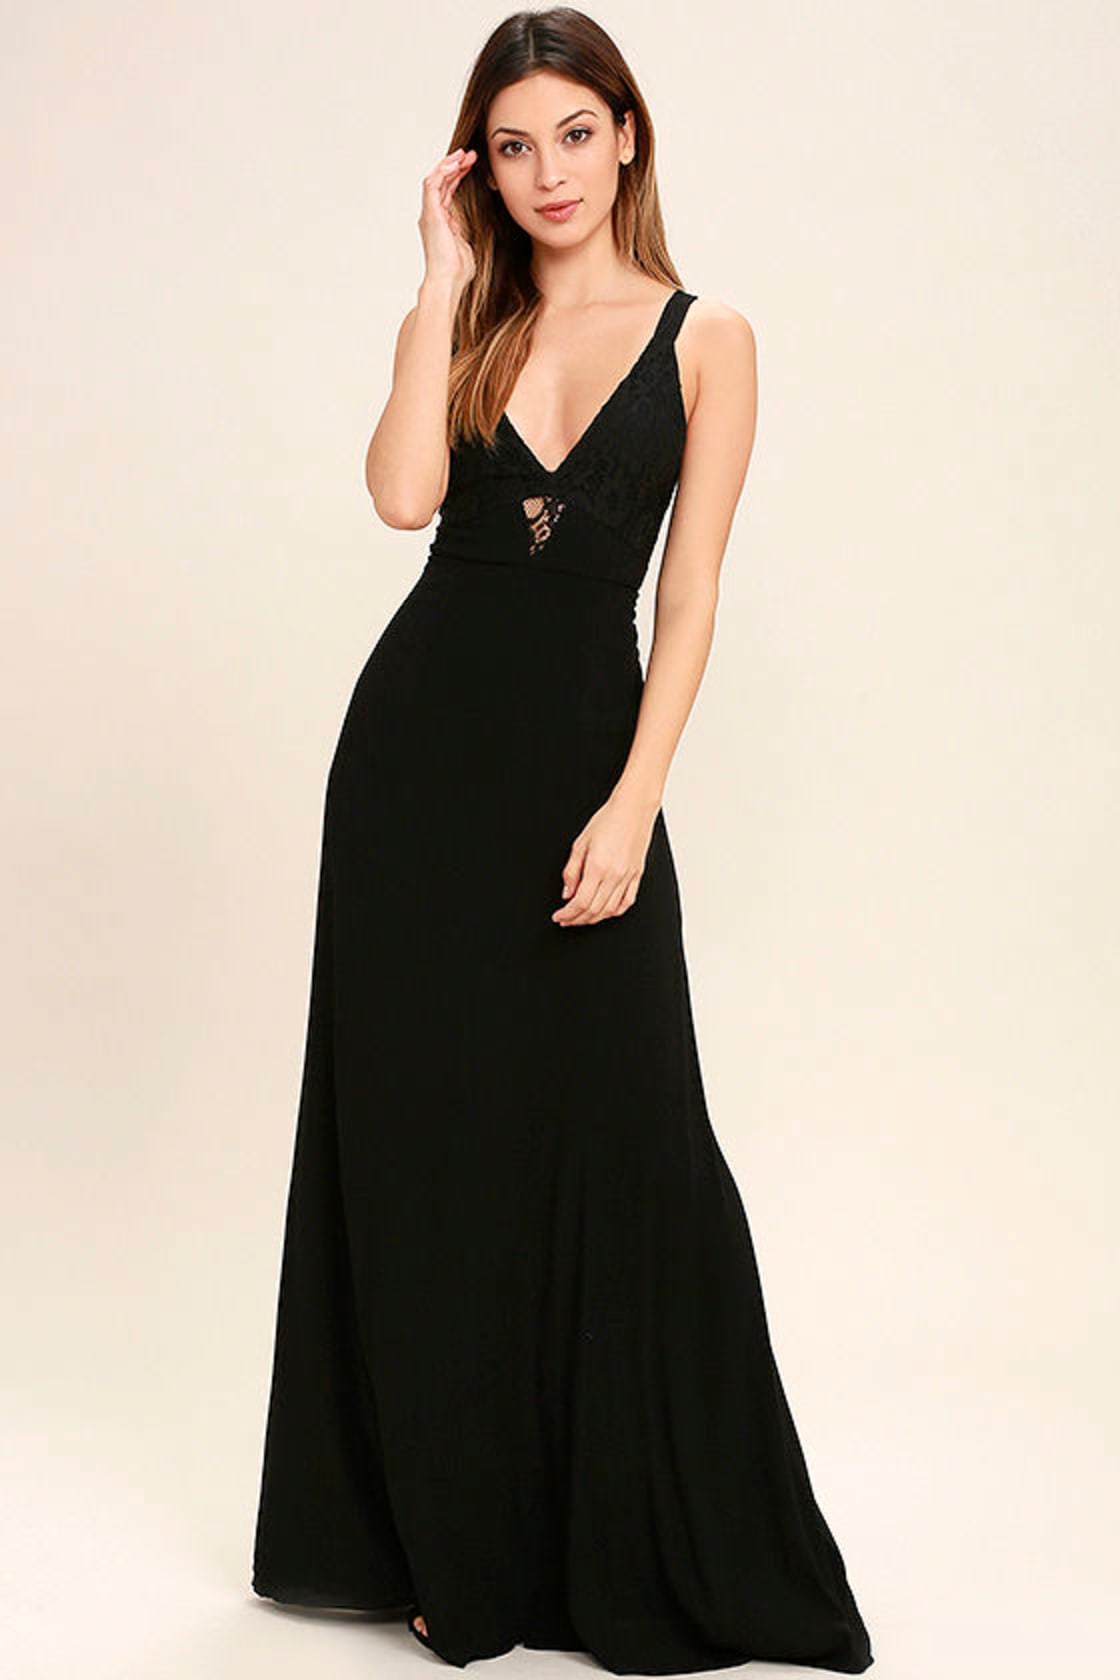 Lovely Black Dress - Lace Dress - Maxi Dress - $59.00 - Lulus